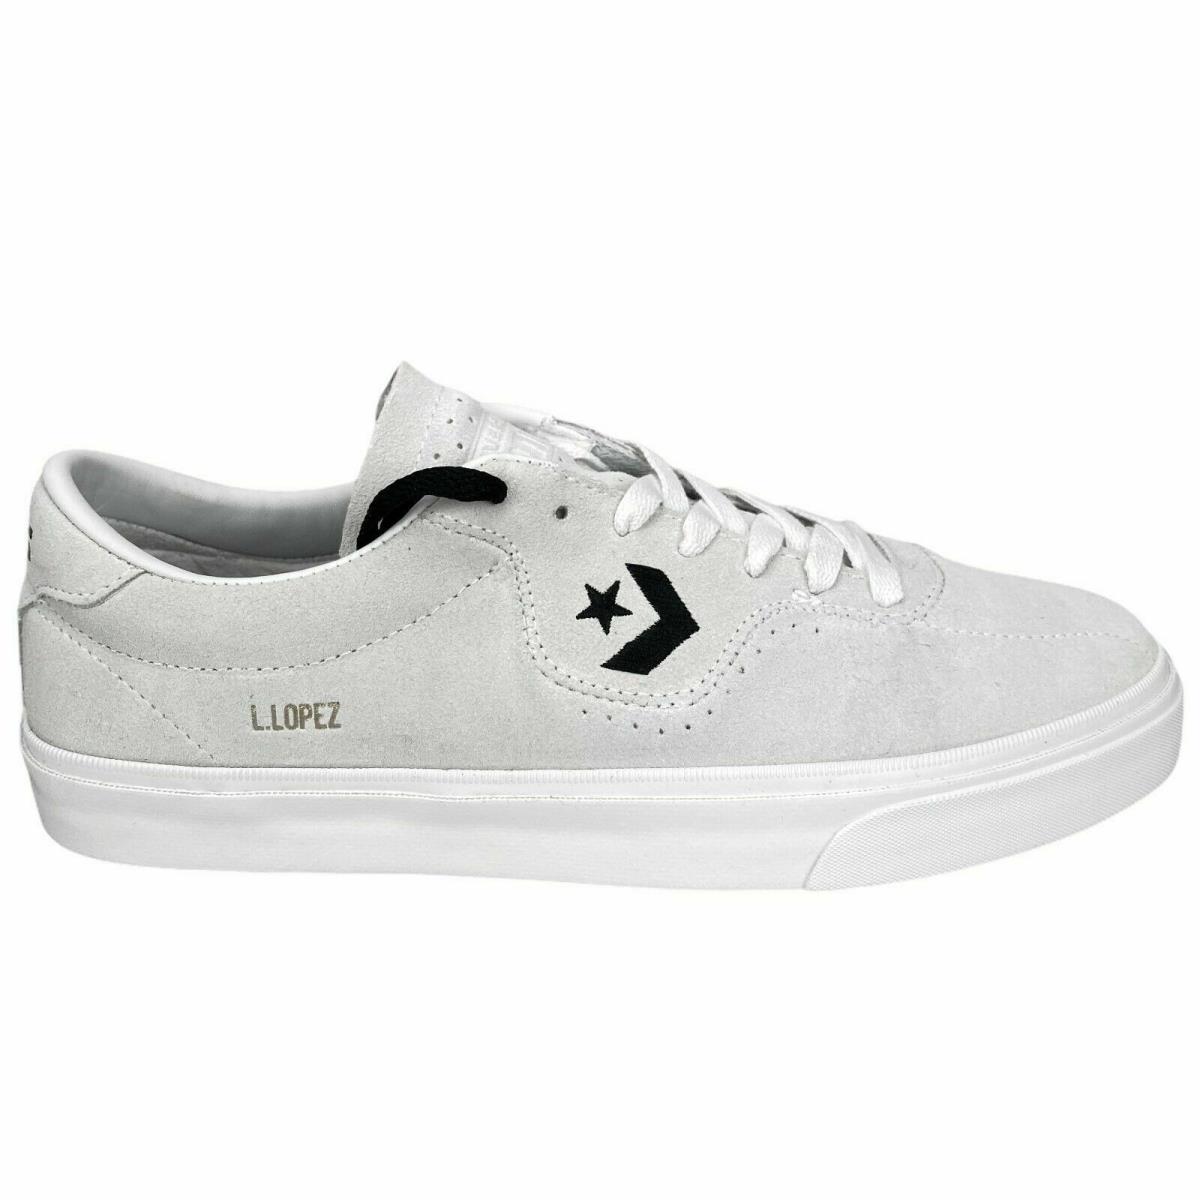 Converse Mens Louie Lopez Pro Ox Cons Suede Skate Shoes Size 8 Style 163262c - White/beige , White/Black Manufacturer